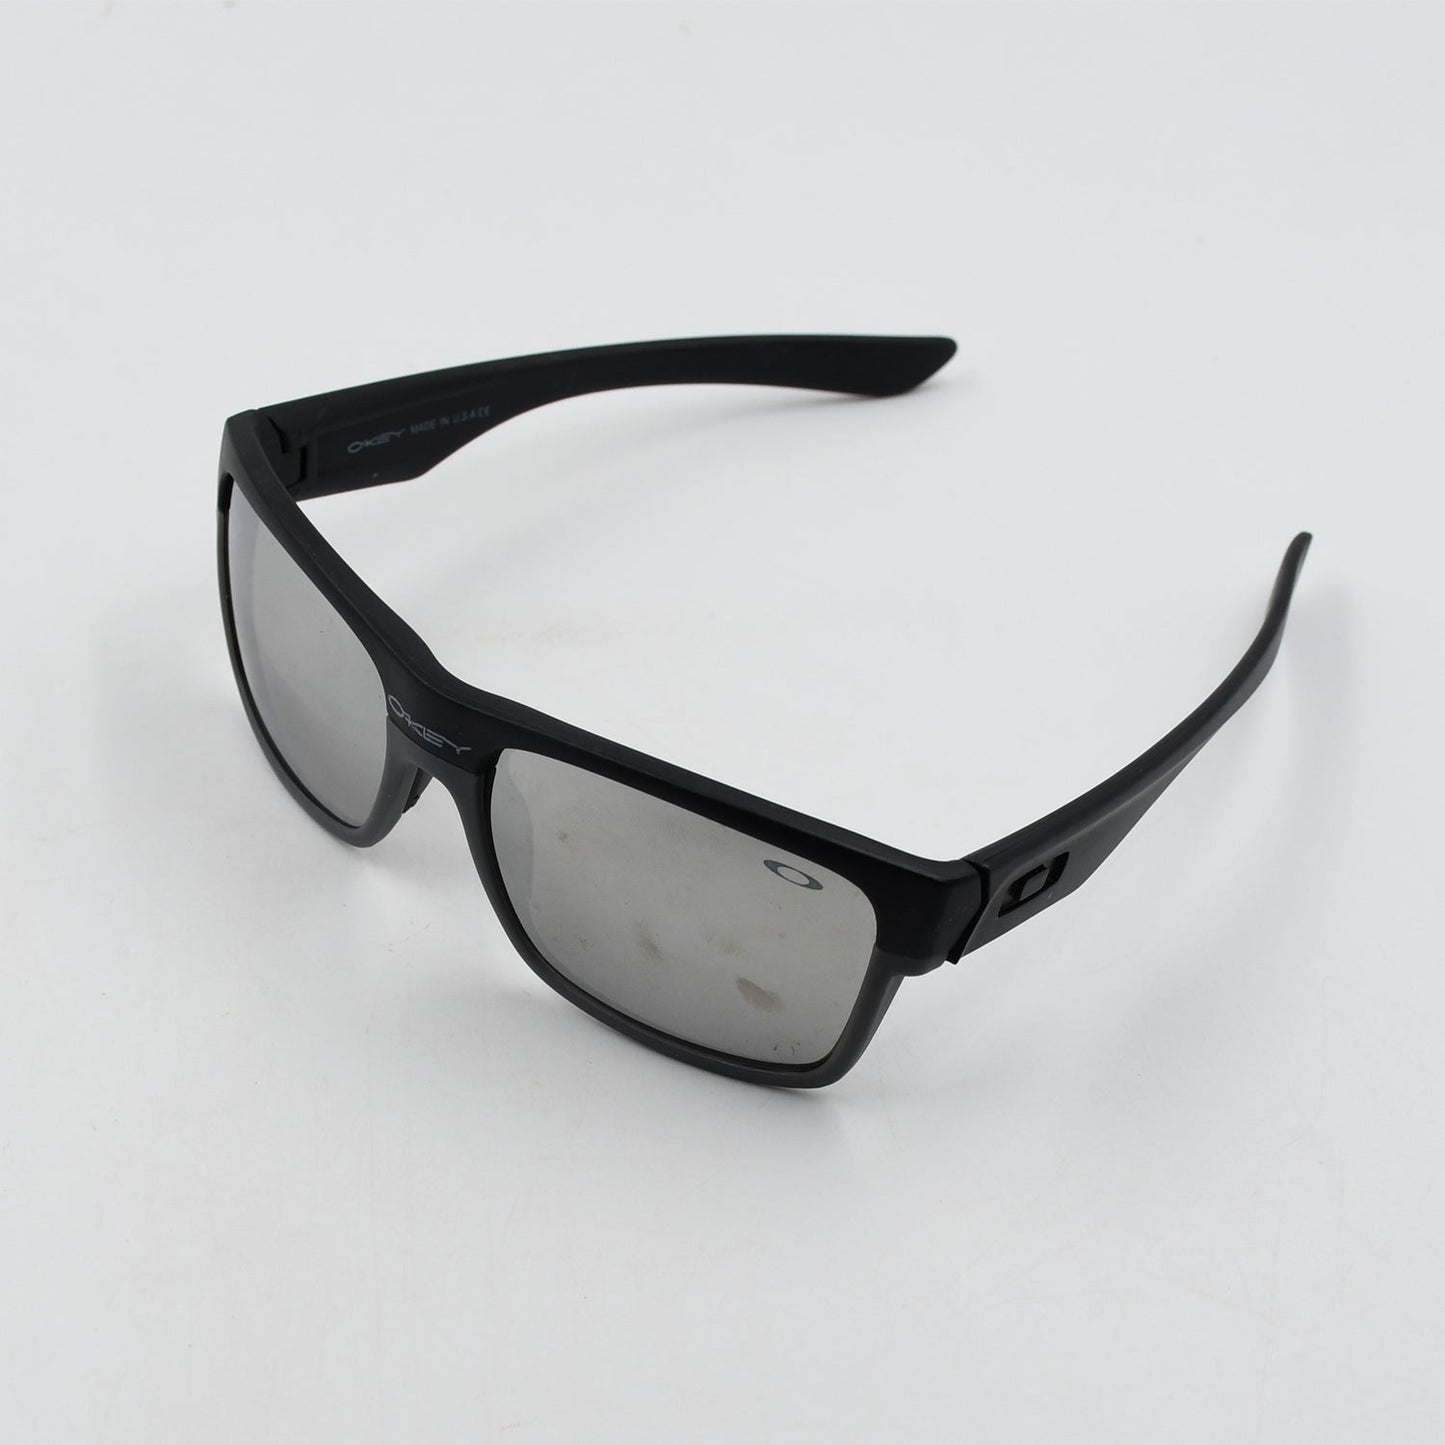 7759 UV Protected Clear Lens Square Sunglasses, Protect Sunglasses | Clear Vision Glasses for Driving Car & Bike Riding Black Glasses for Men and Women